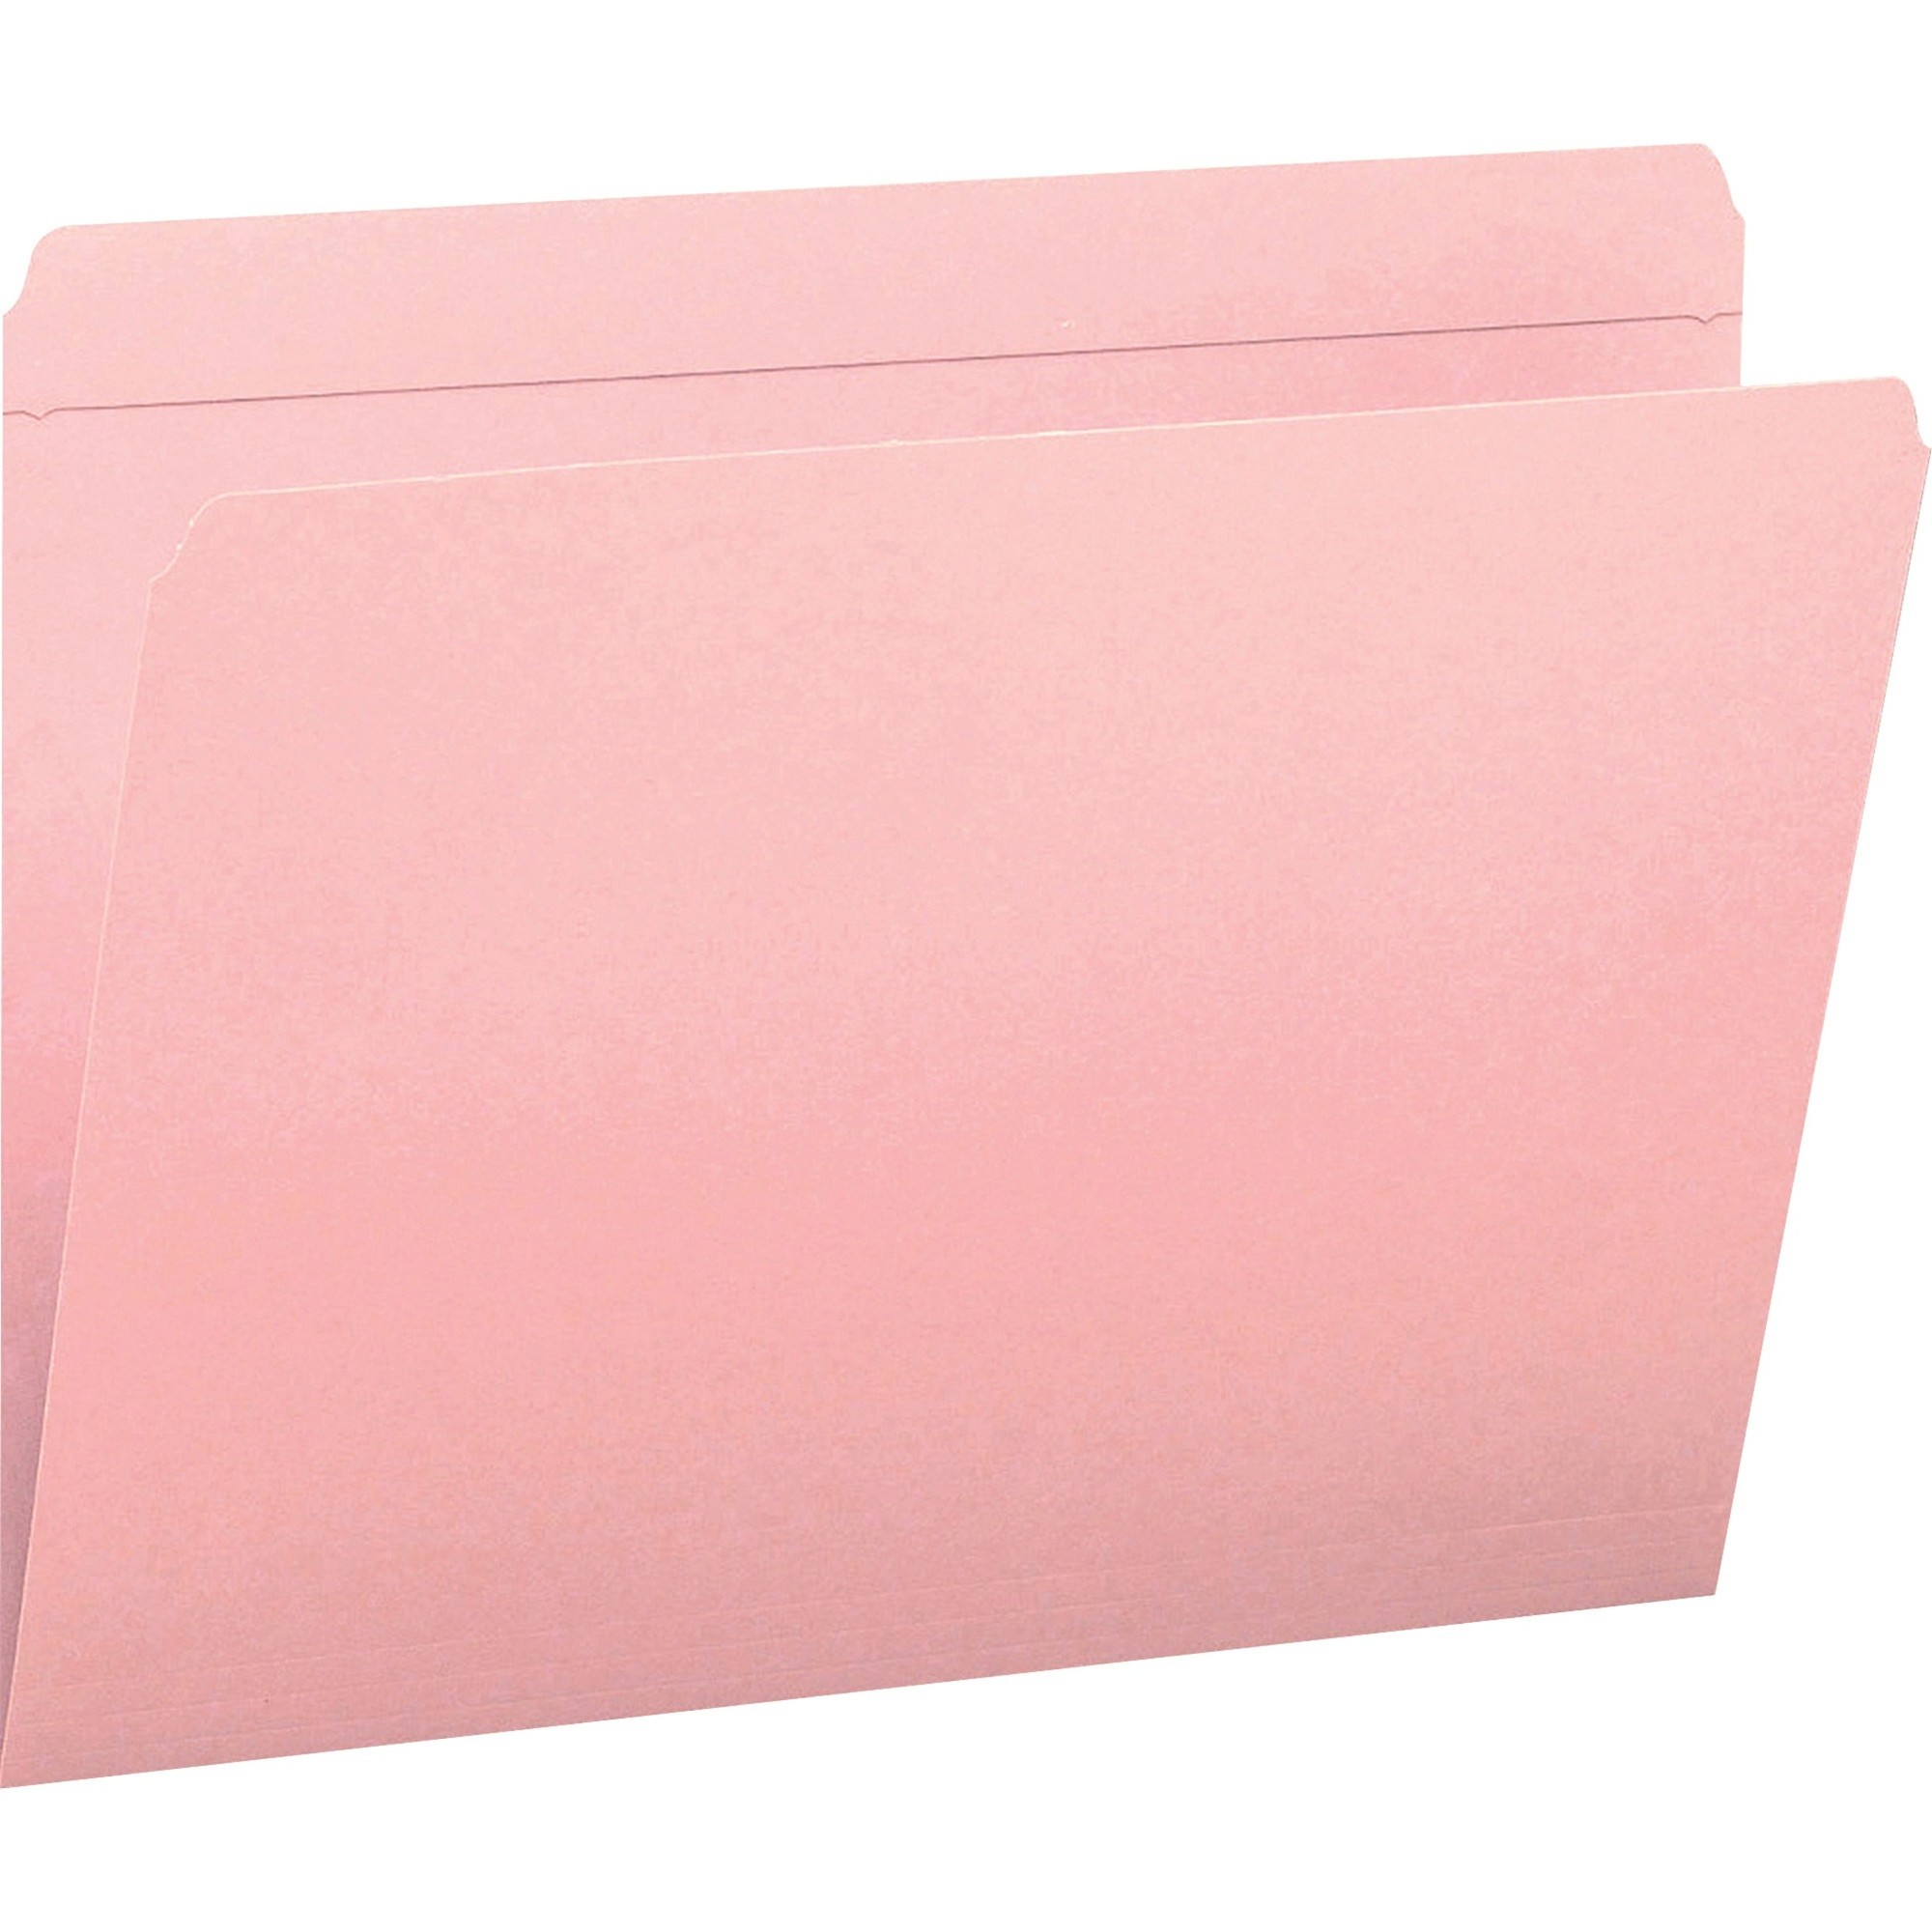 File Folders, Straight Cut, Reinforced Top Tab, Letter, Pink, 100/Box